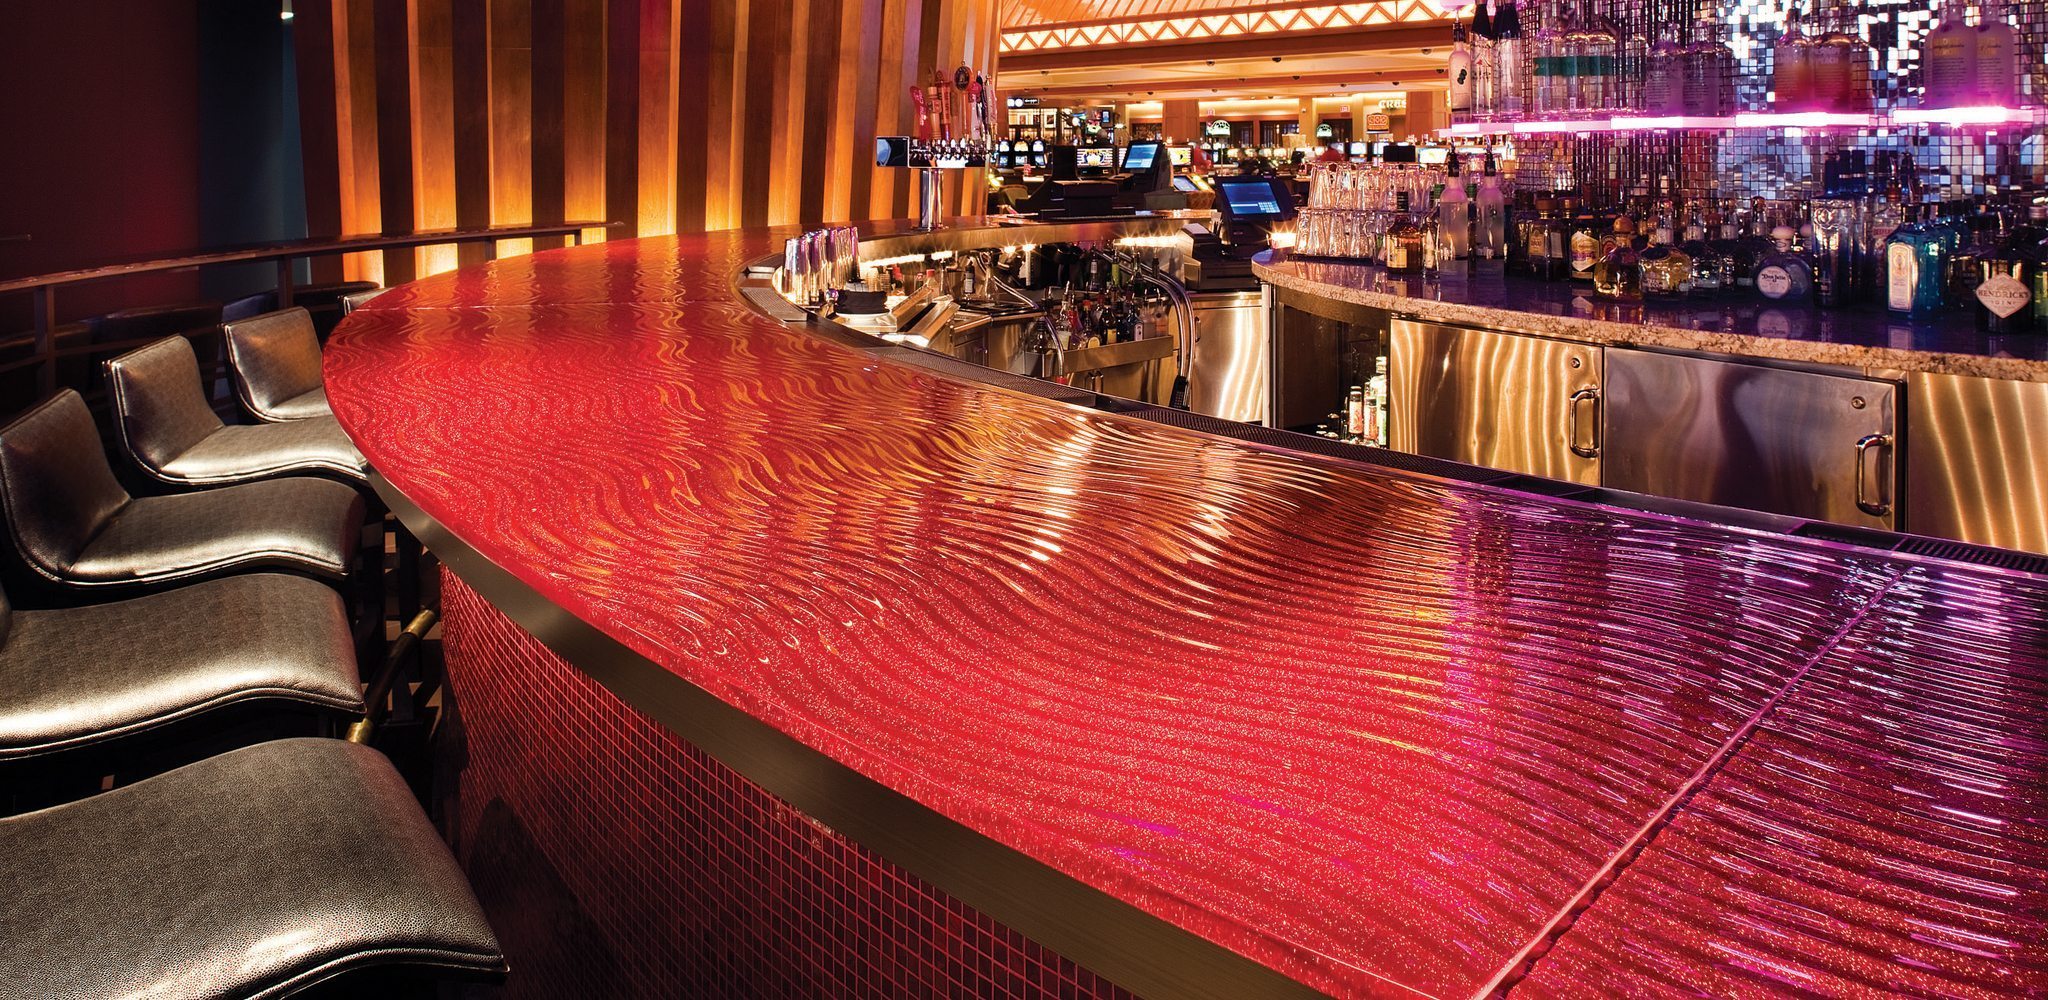 snoqualmie casino bar